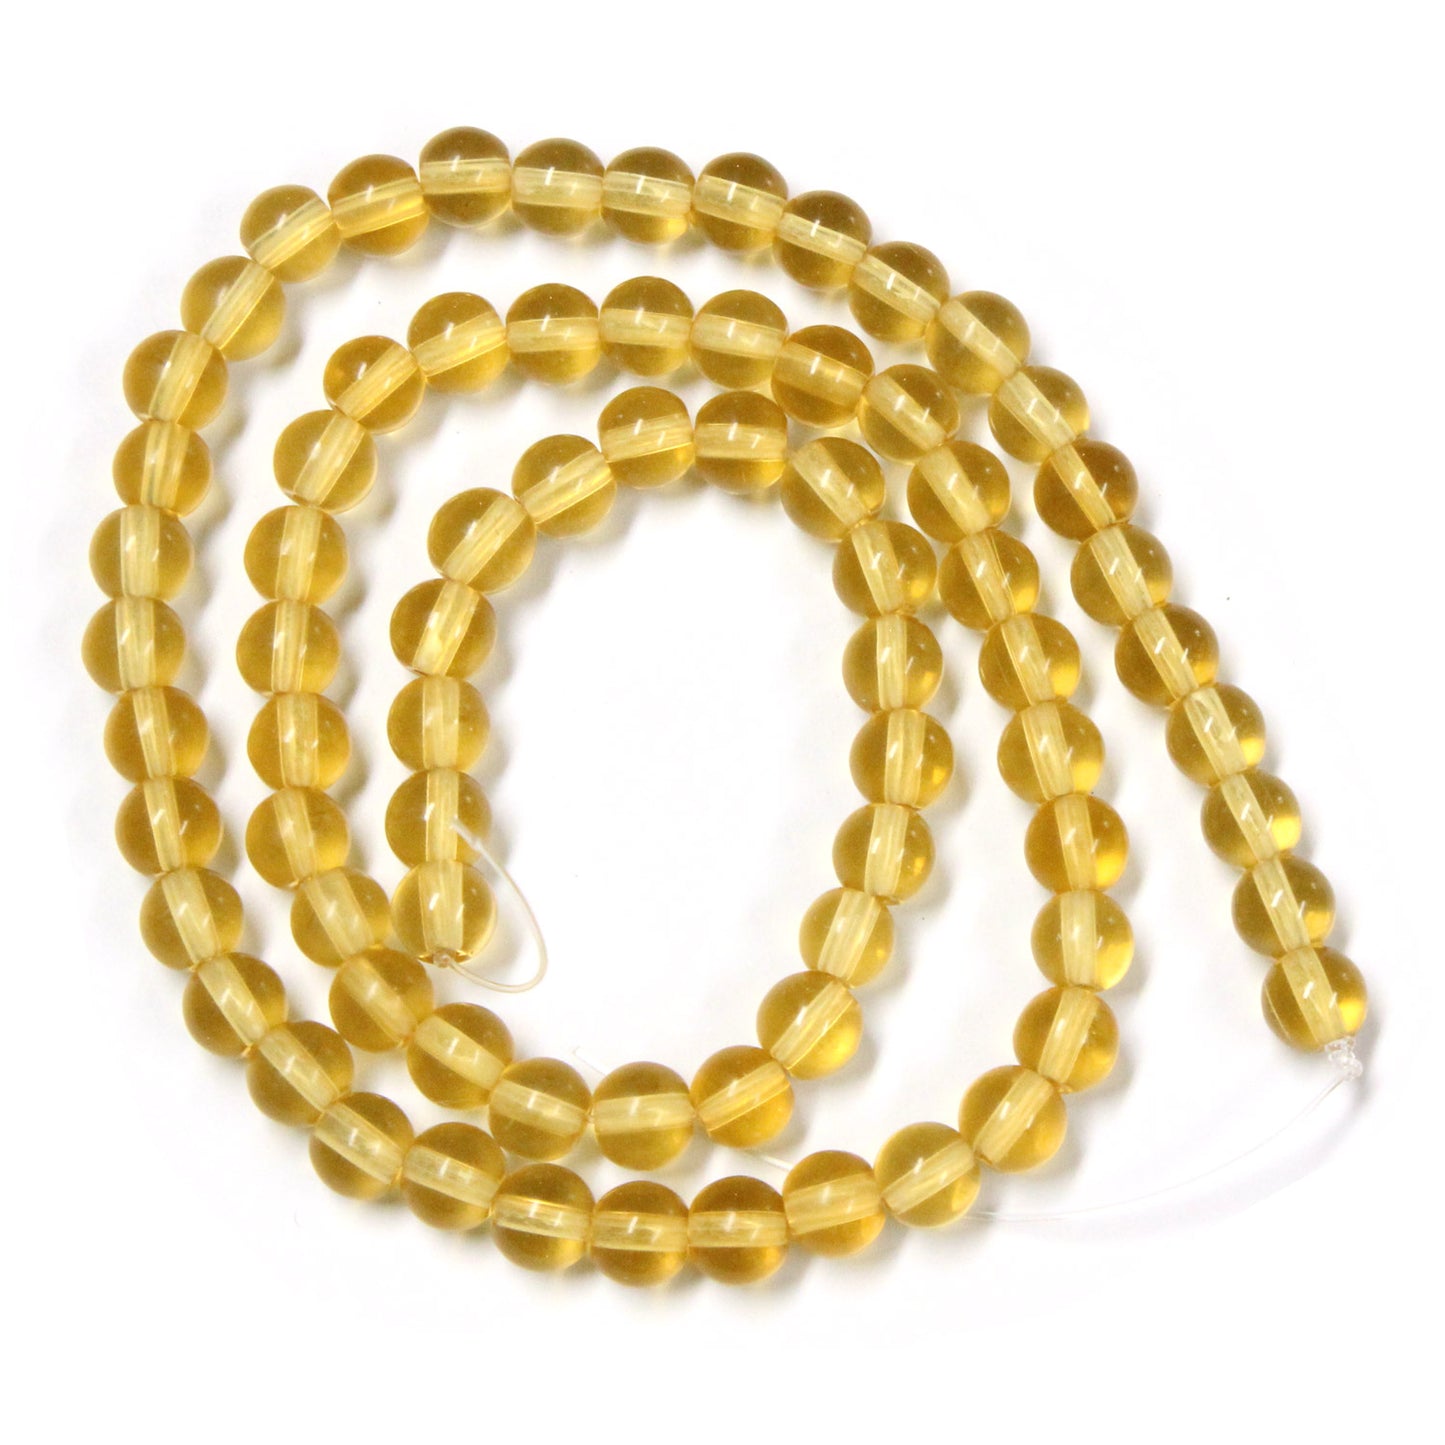 6mm Yellow Topaz / 16" Strand / man-made / smooth round stone beads